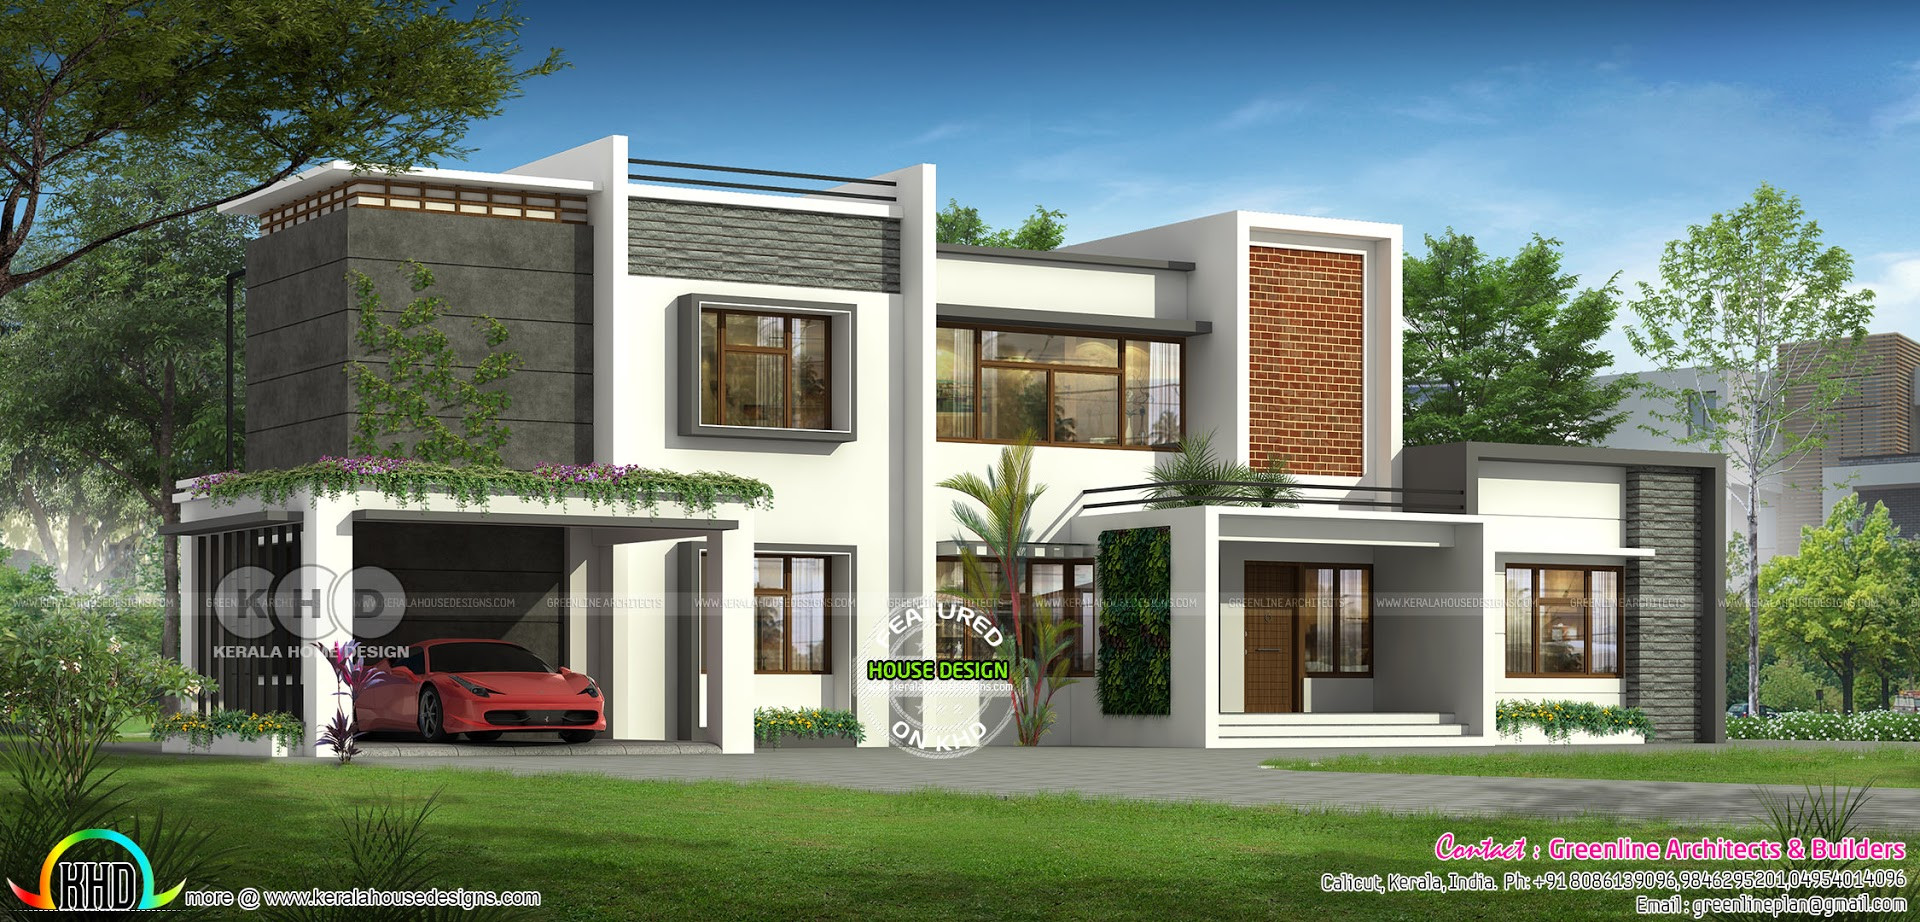 5 Bedroom Modern House Plans
 5 bedroom luxury modern house plan design Kerala home